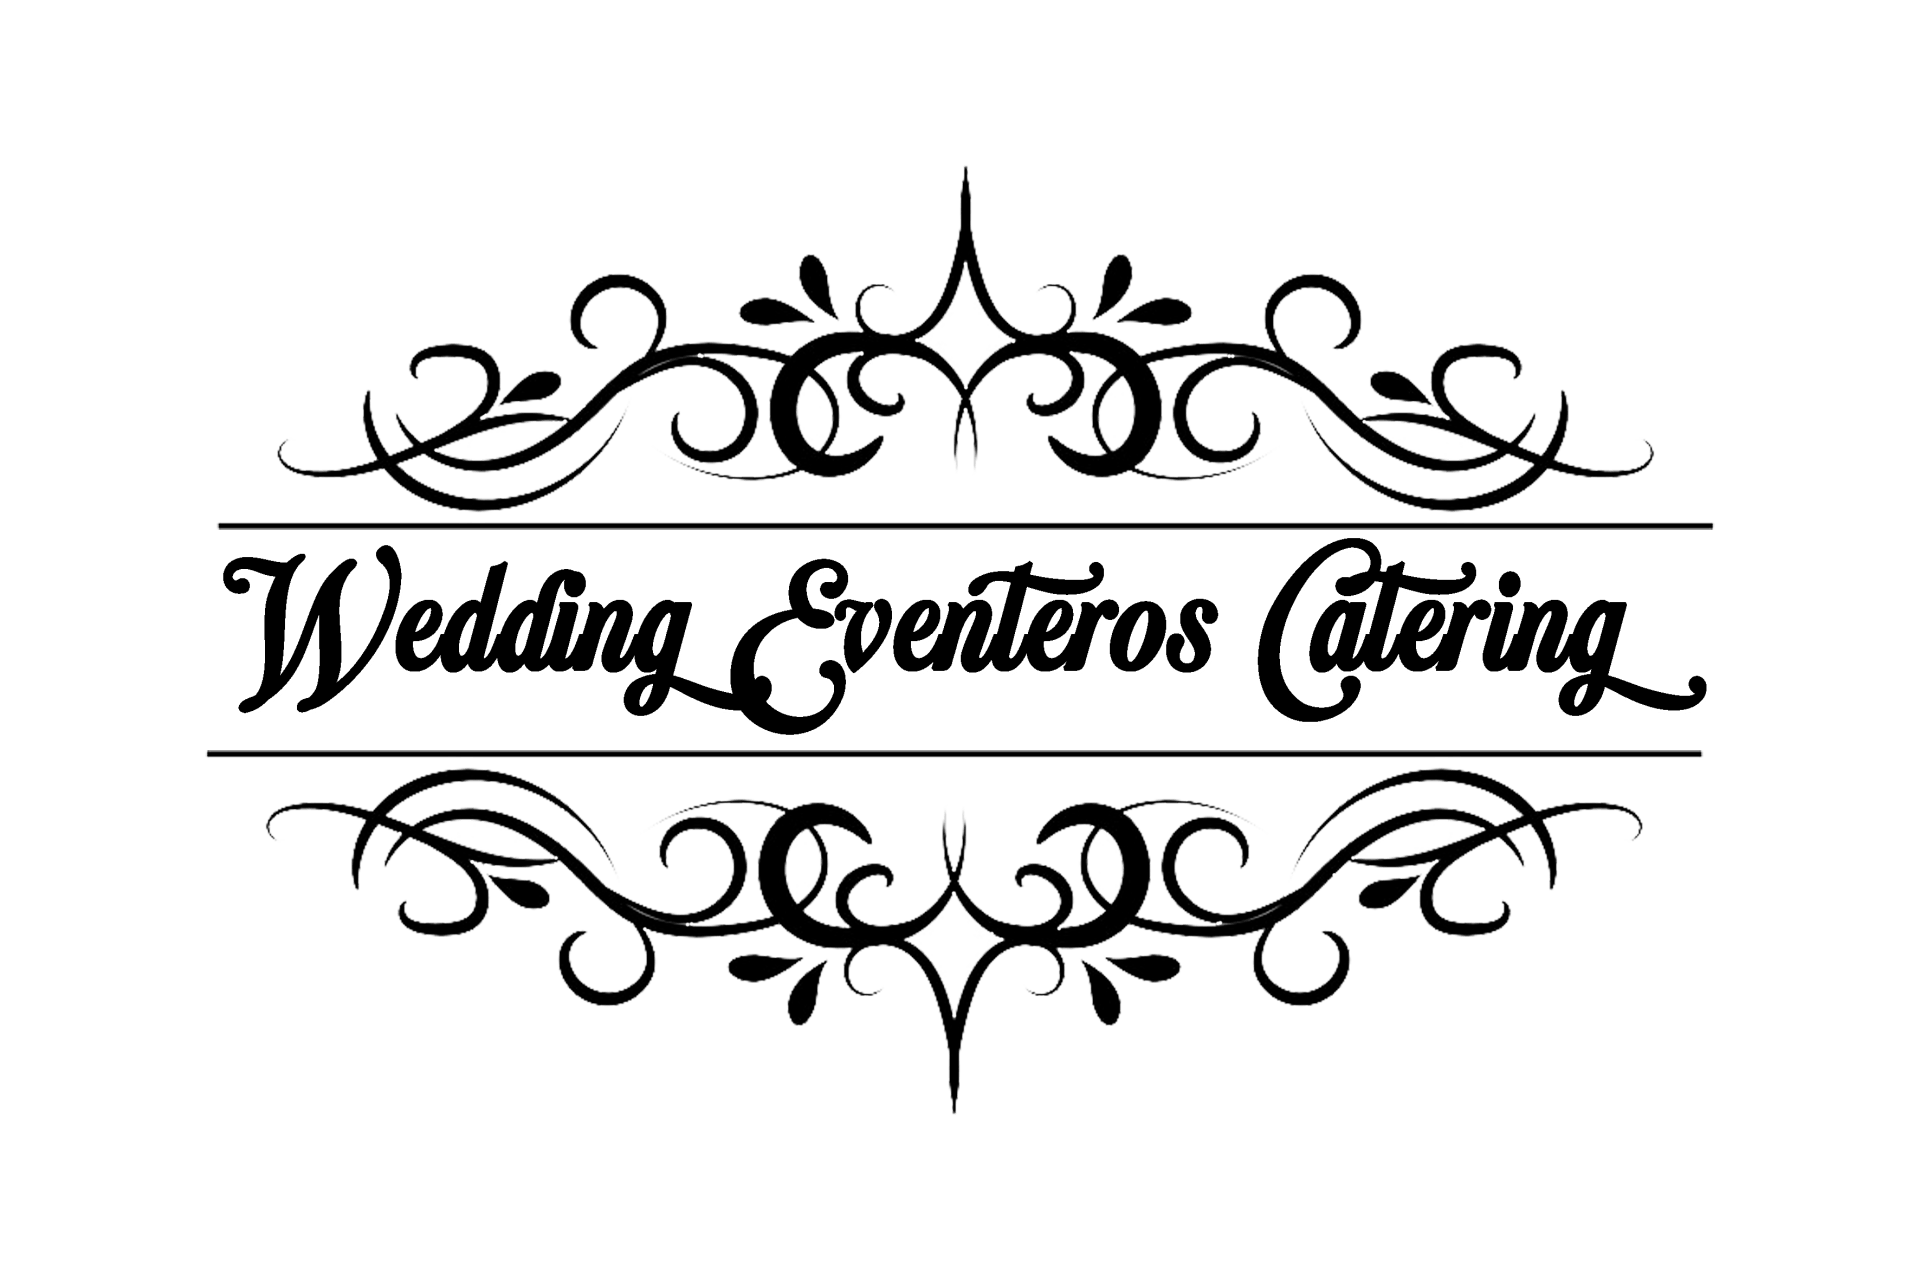 Wendding Eventeros - Logo